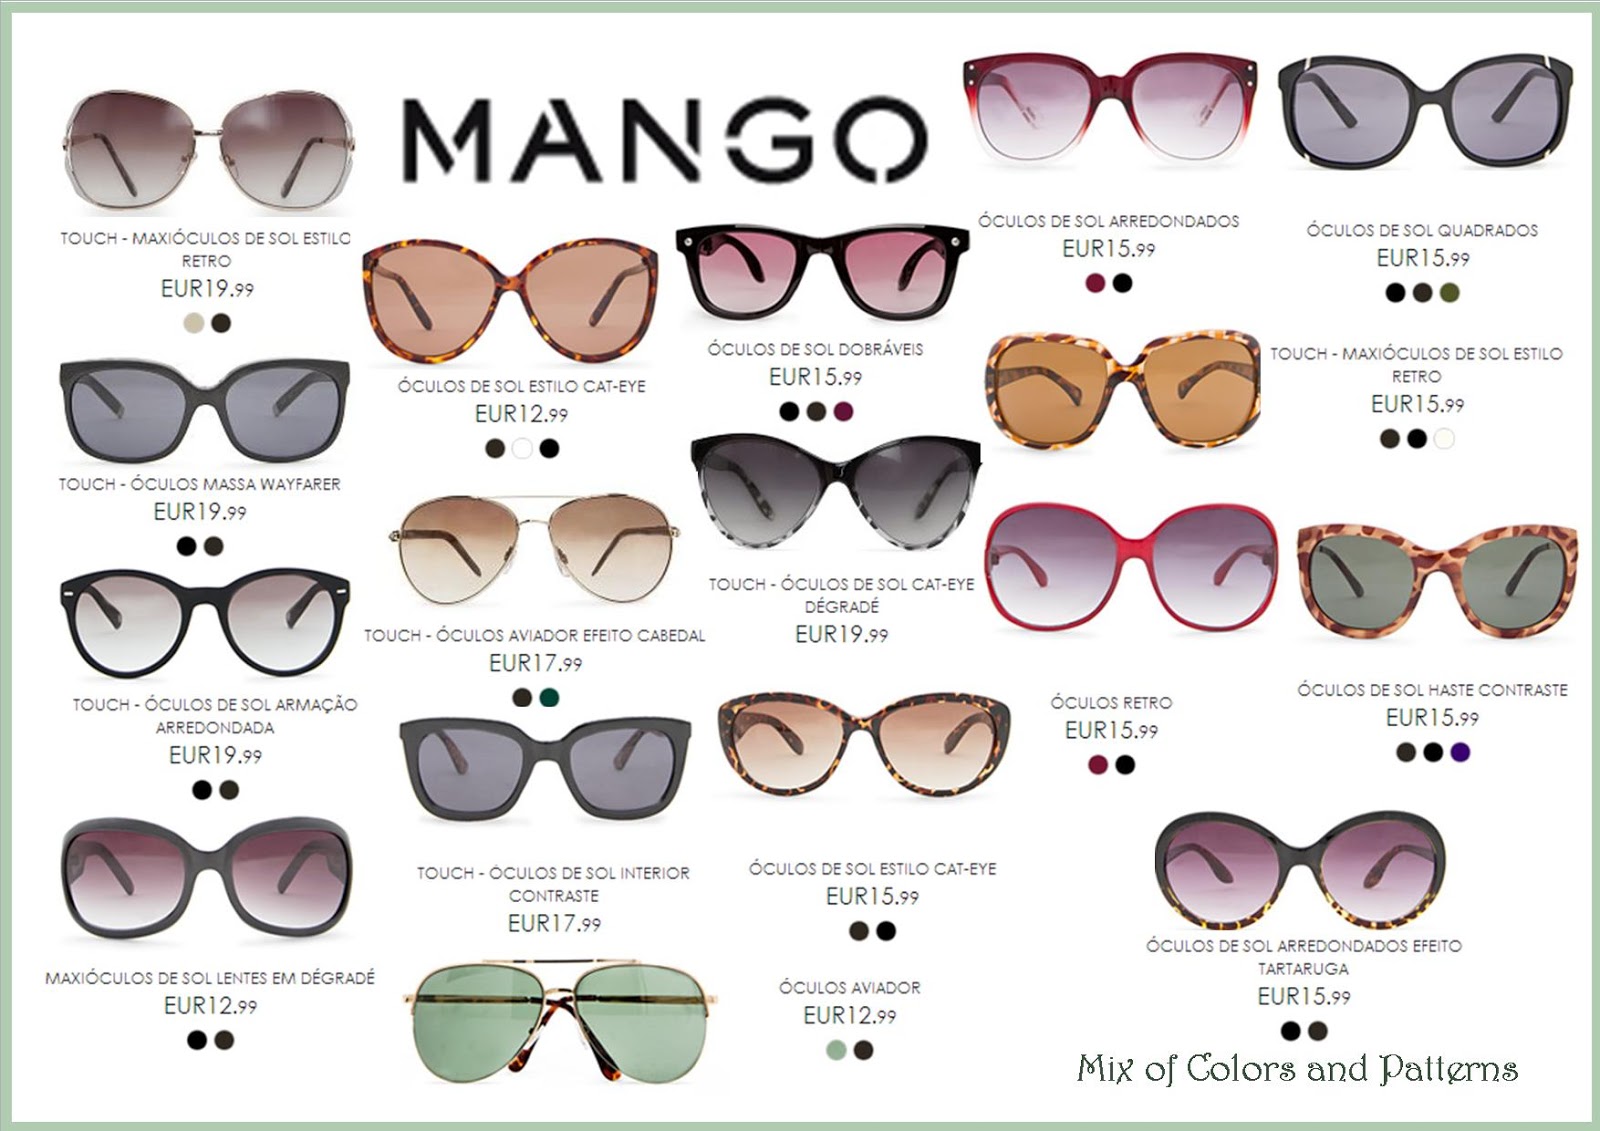 Desperate Go up Ready Mix of Colors and Patterns: Encontra os teus óculos de sol na Mango